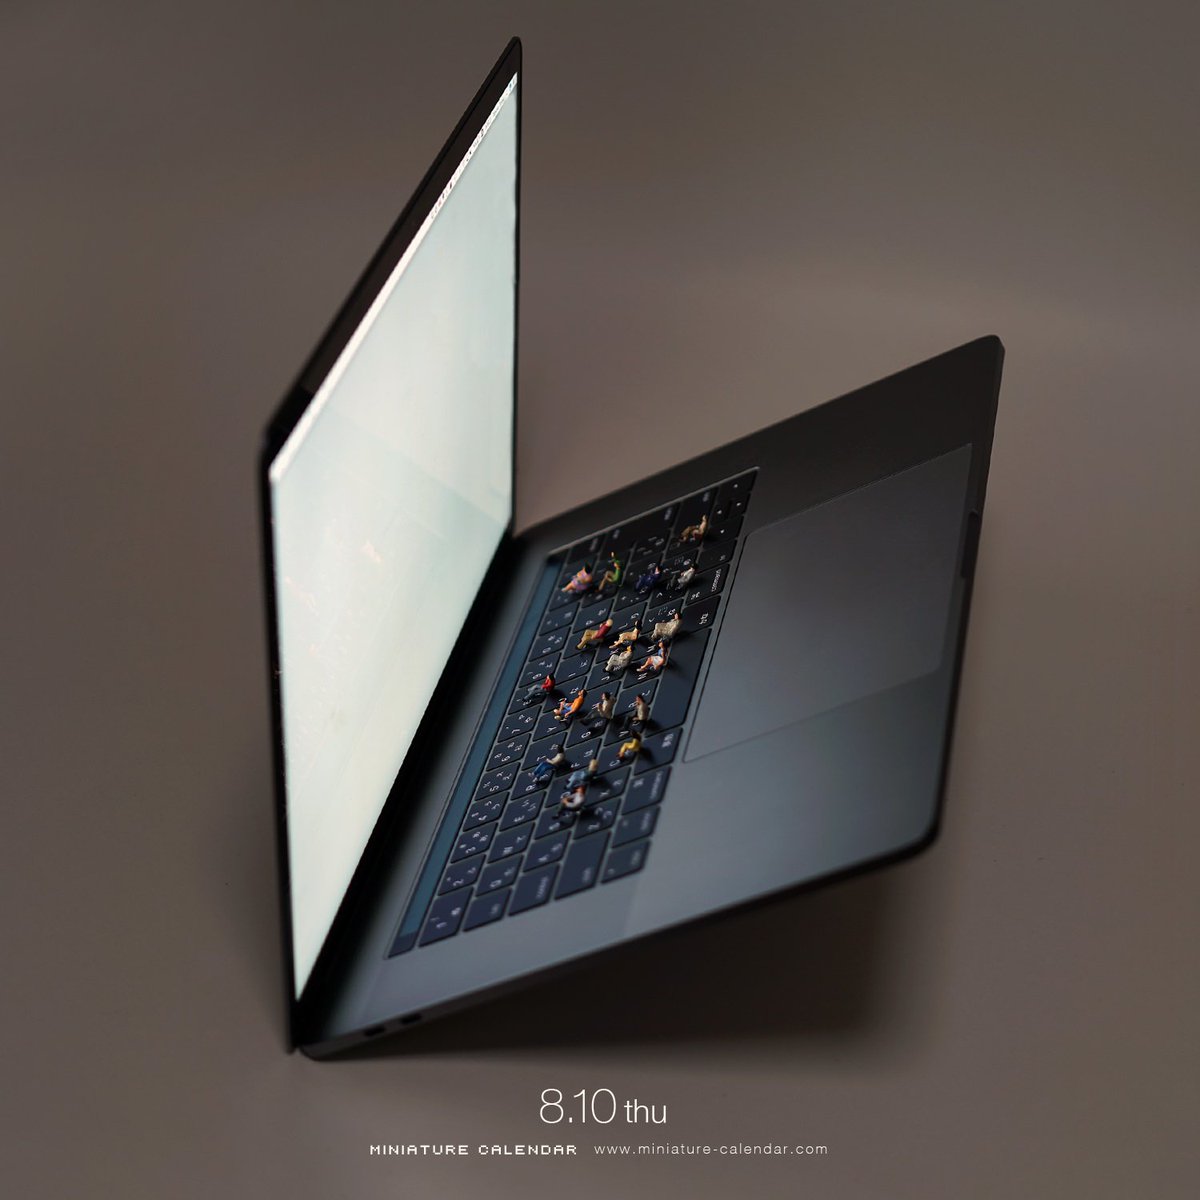 「iMacs シアター
 
#IMAX #MacBookPro 」|Tatsuya Tanaka 田中達也のイラスト